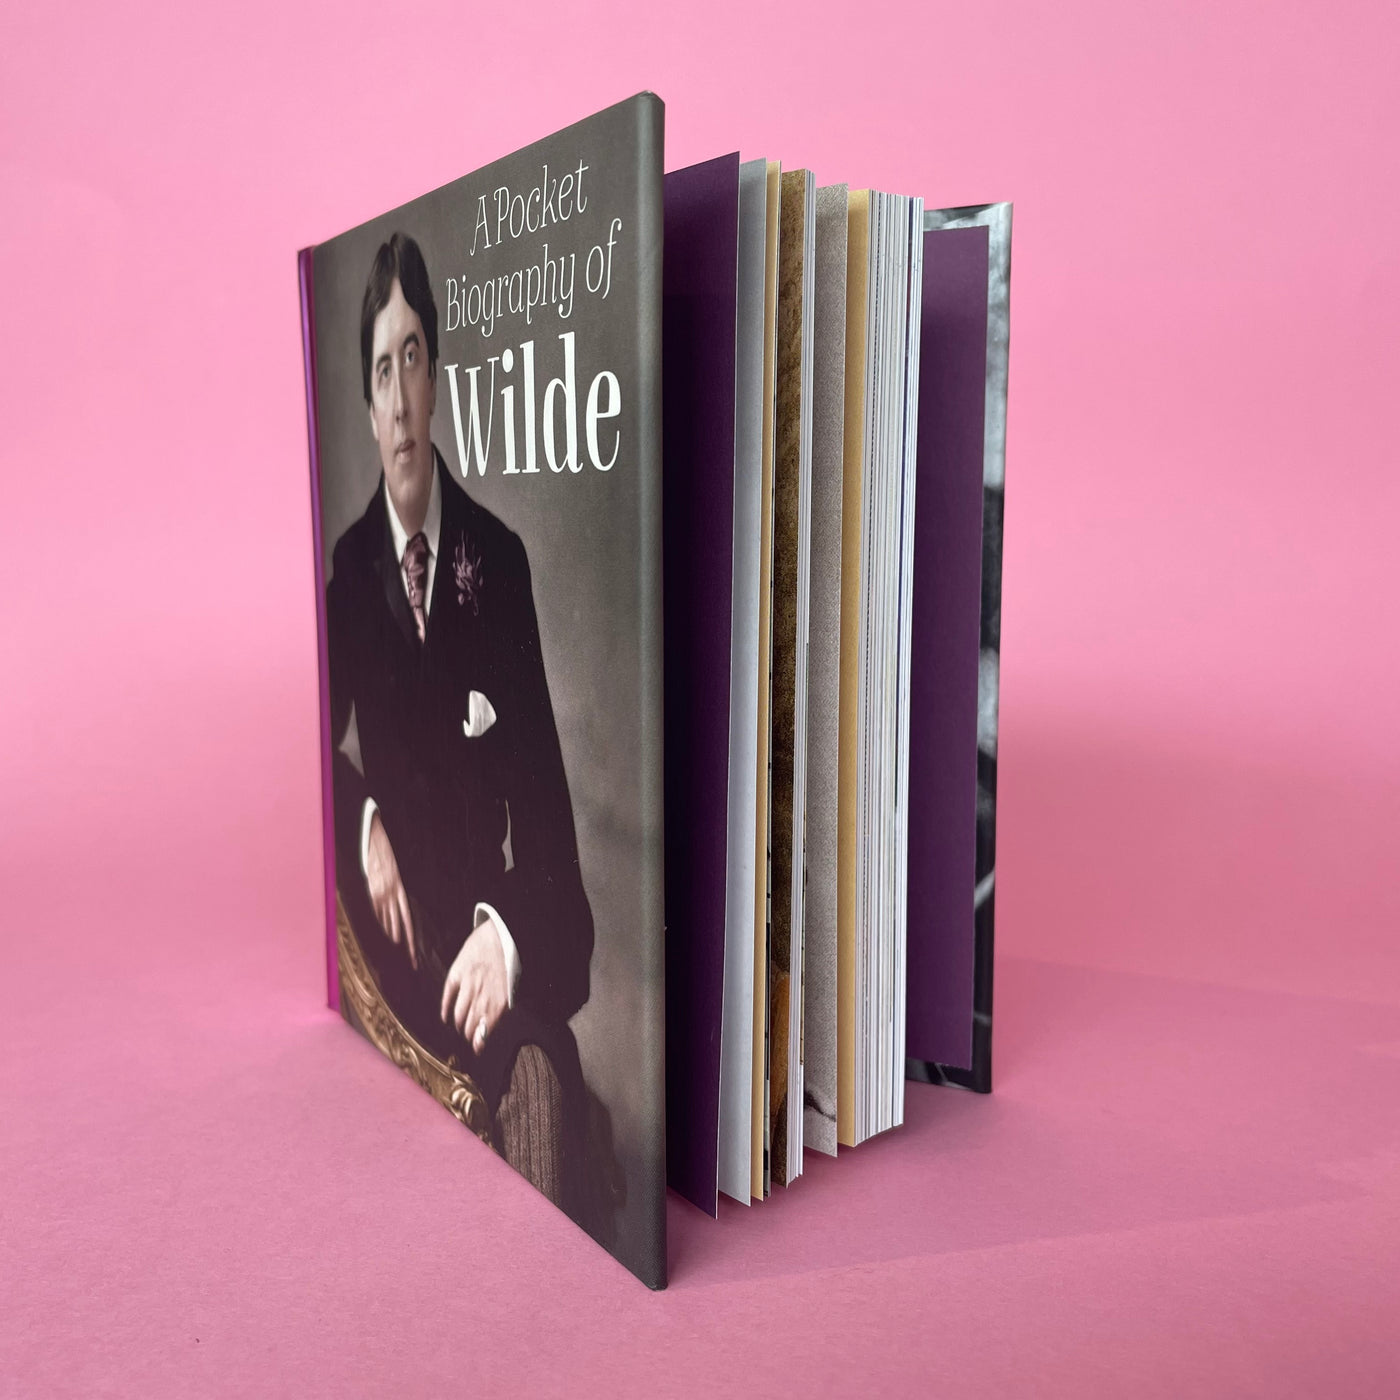 pocket biography of wilde